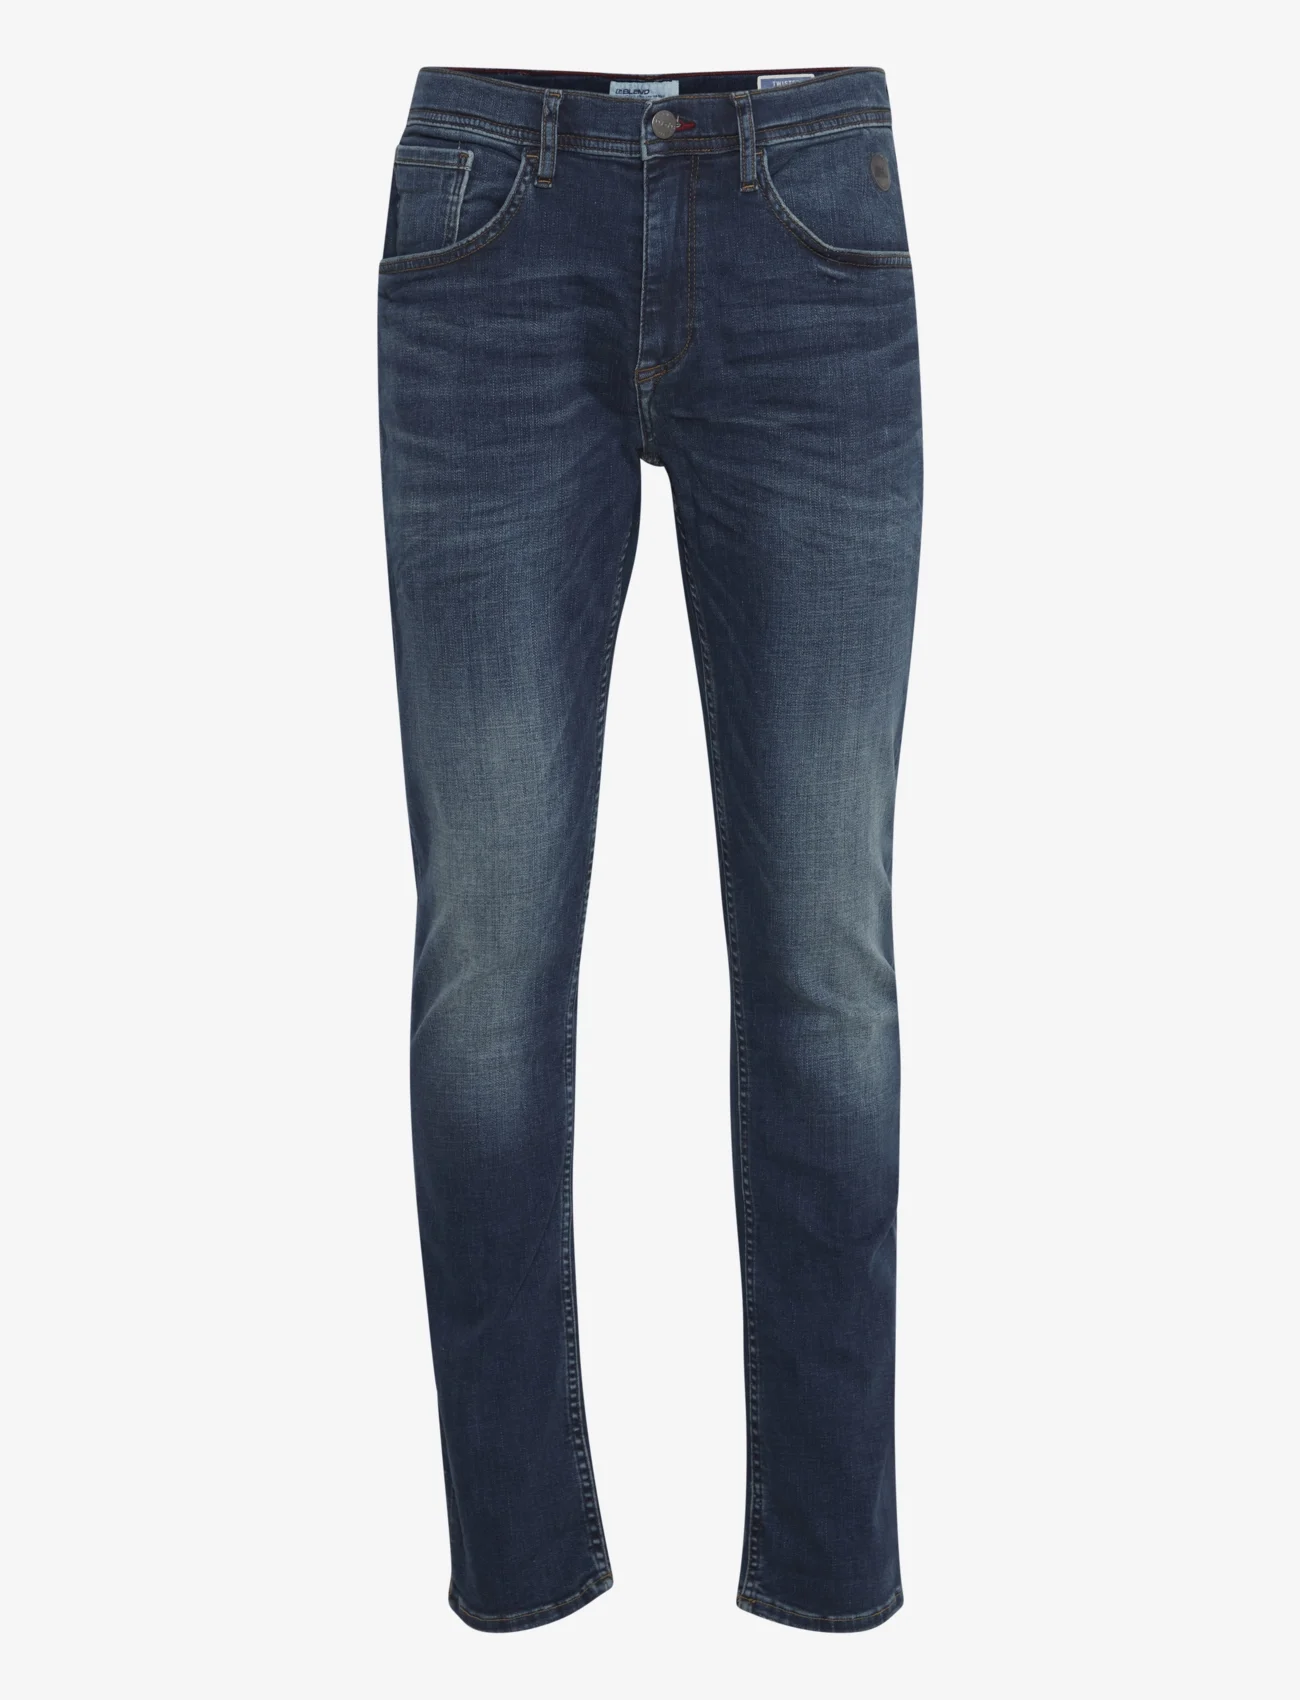 Blend - Twister fit - Multiflex NOOS - slim fit jeans - denim dark blue - 0